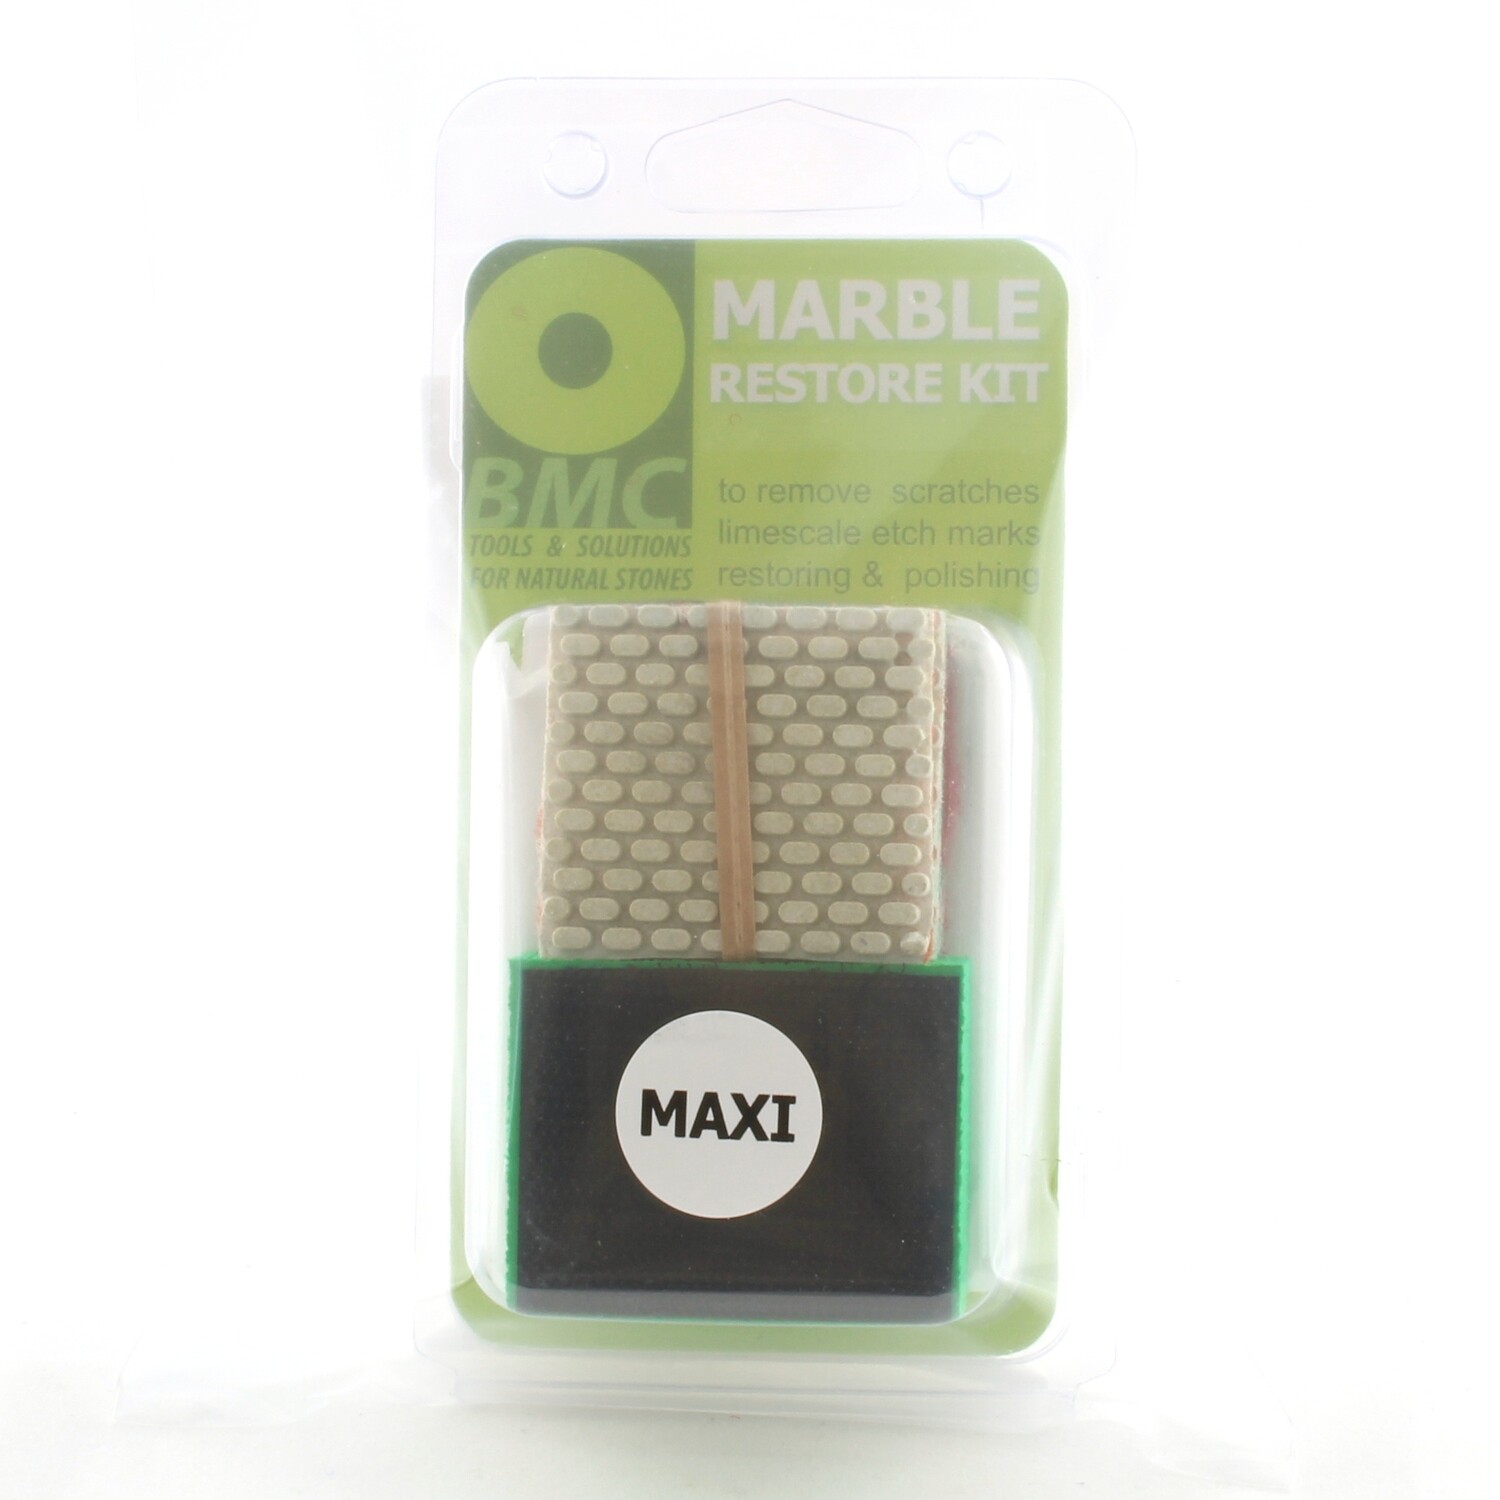 Marble Restore kit MAXI to polishing marble, travertine and limestone